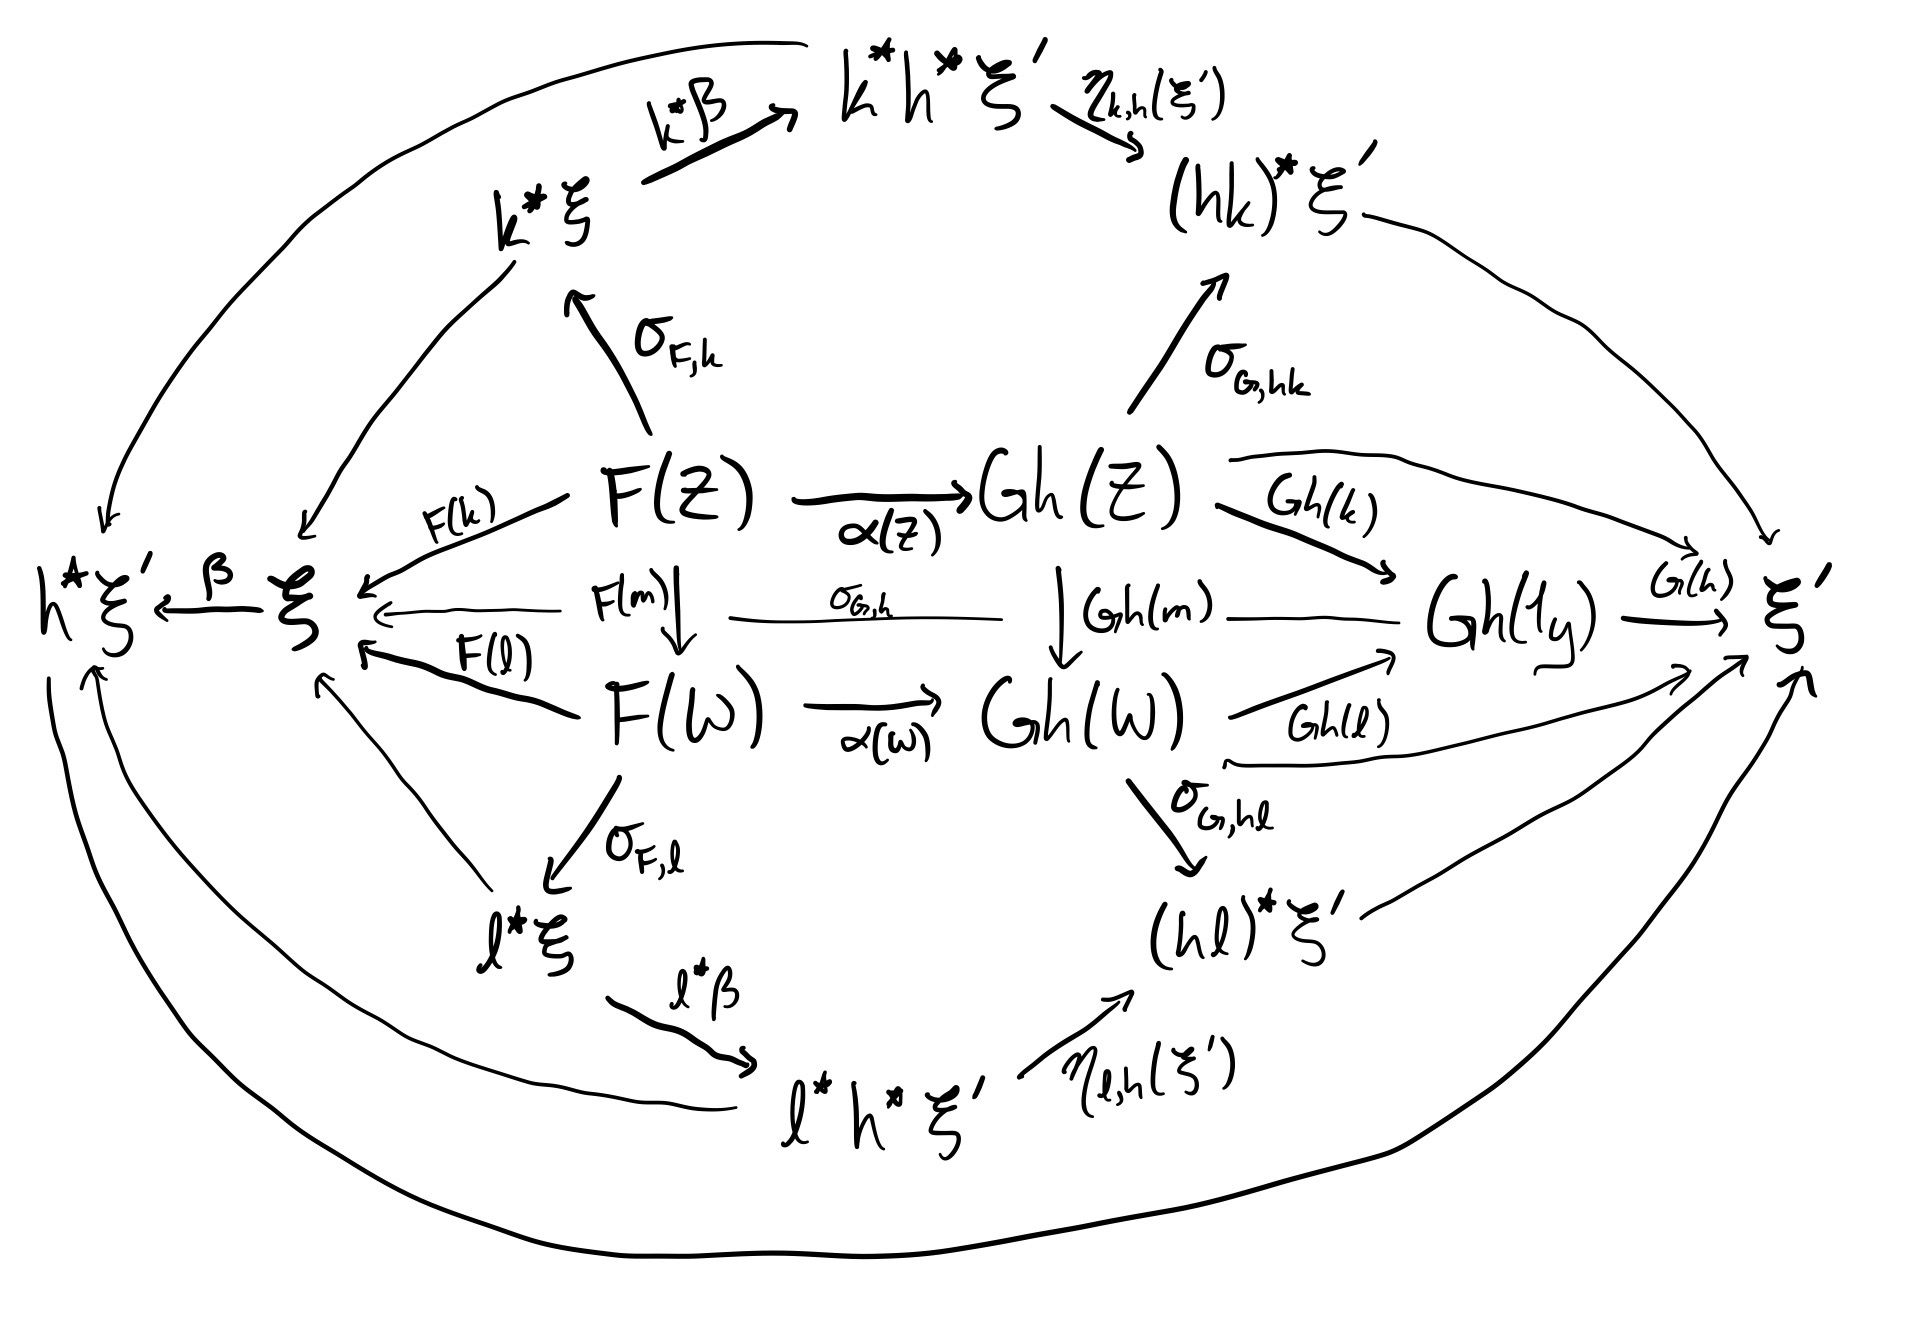 The argument above in commutative diagram form